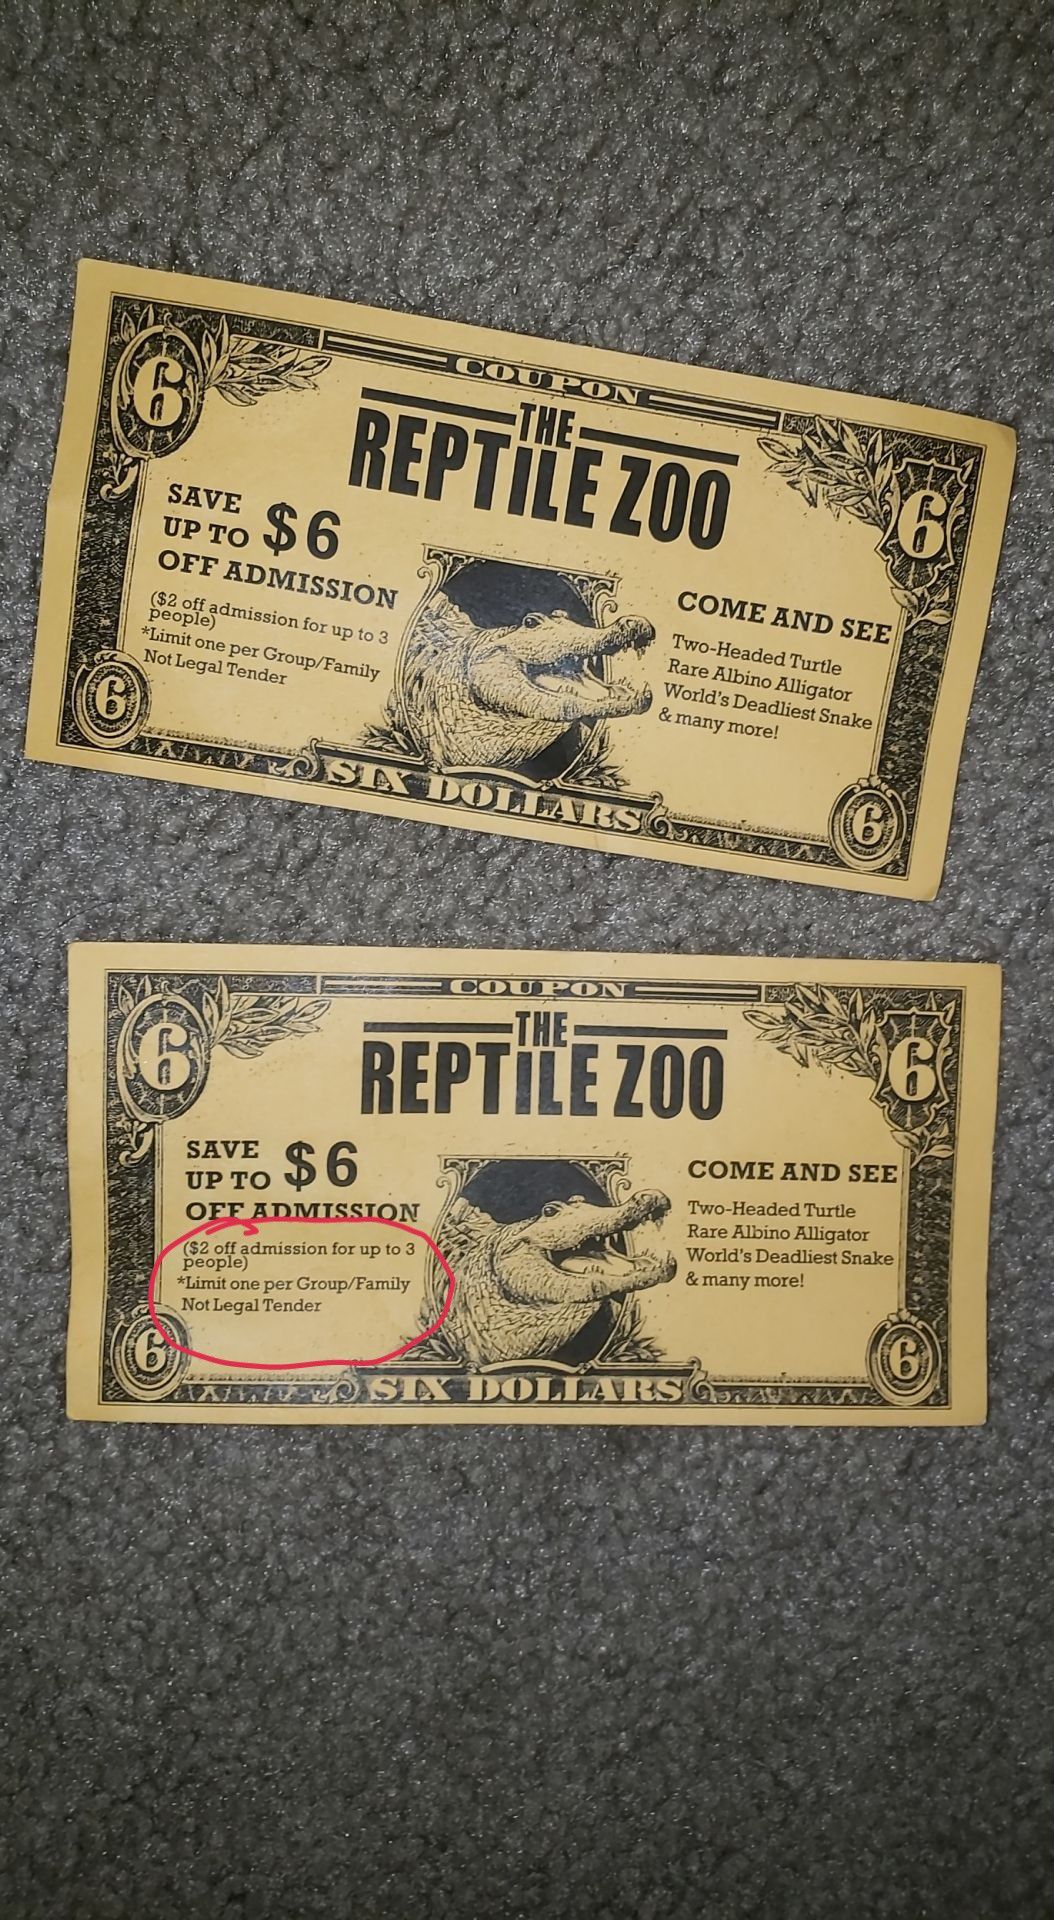 Reptile Zoo coupon